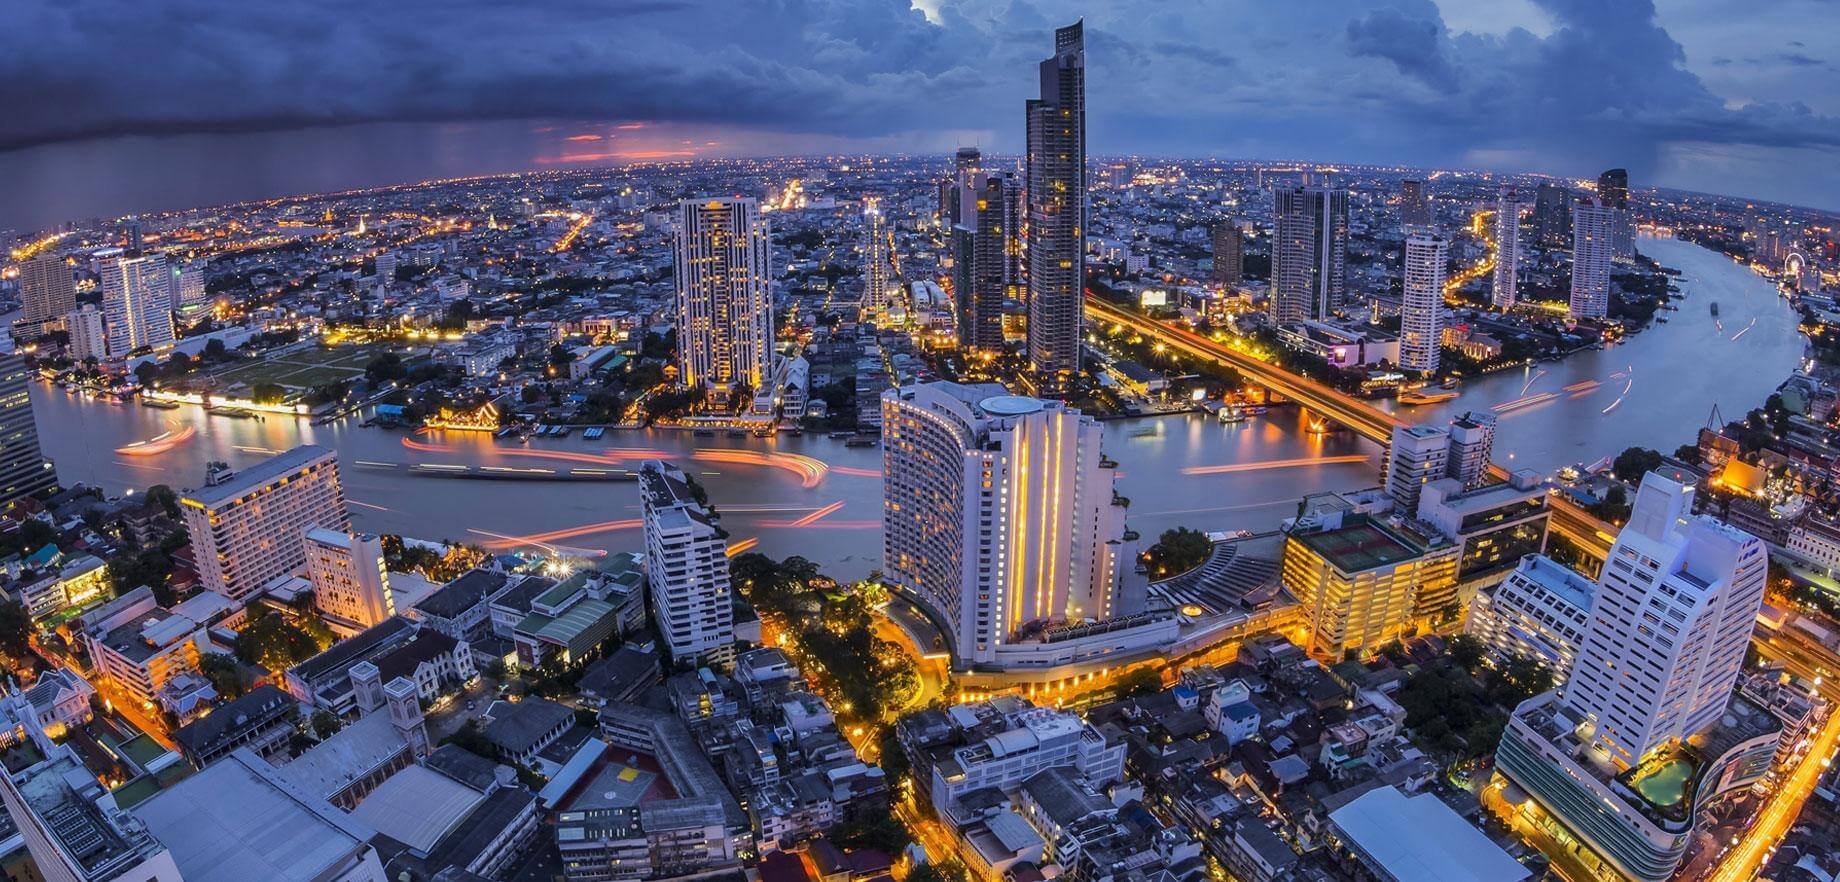 Airlines Flight Deals To Bangkok